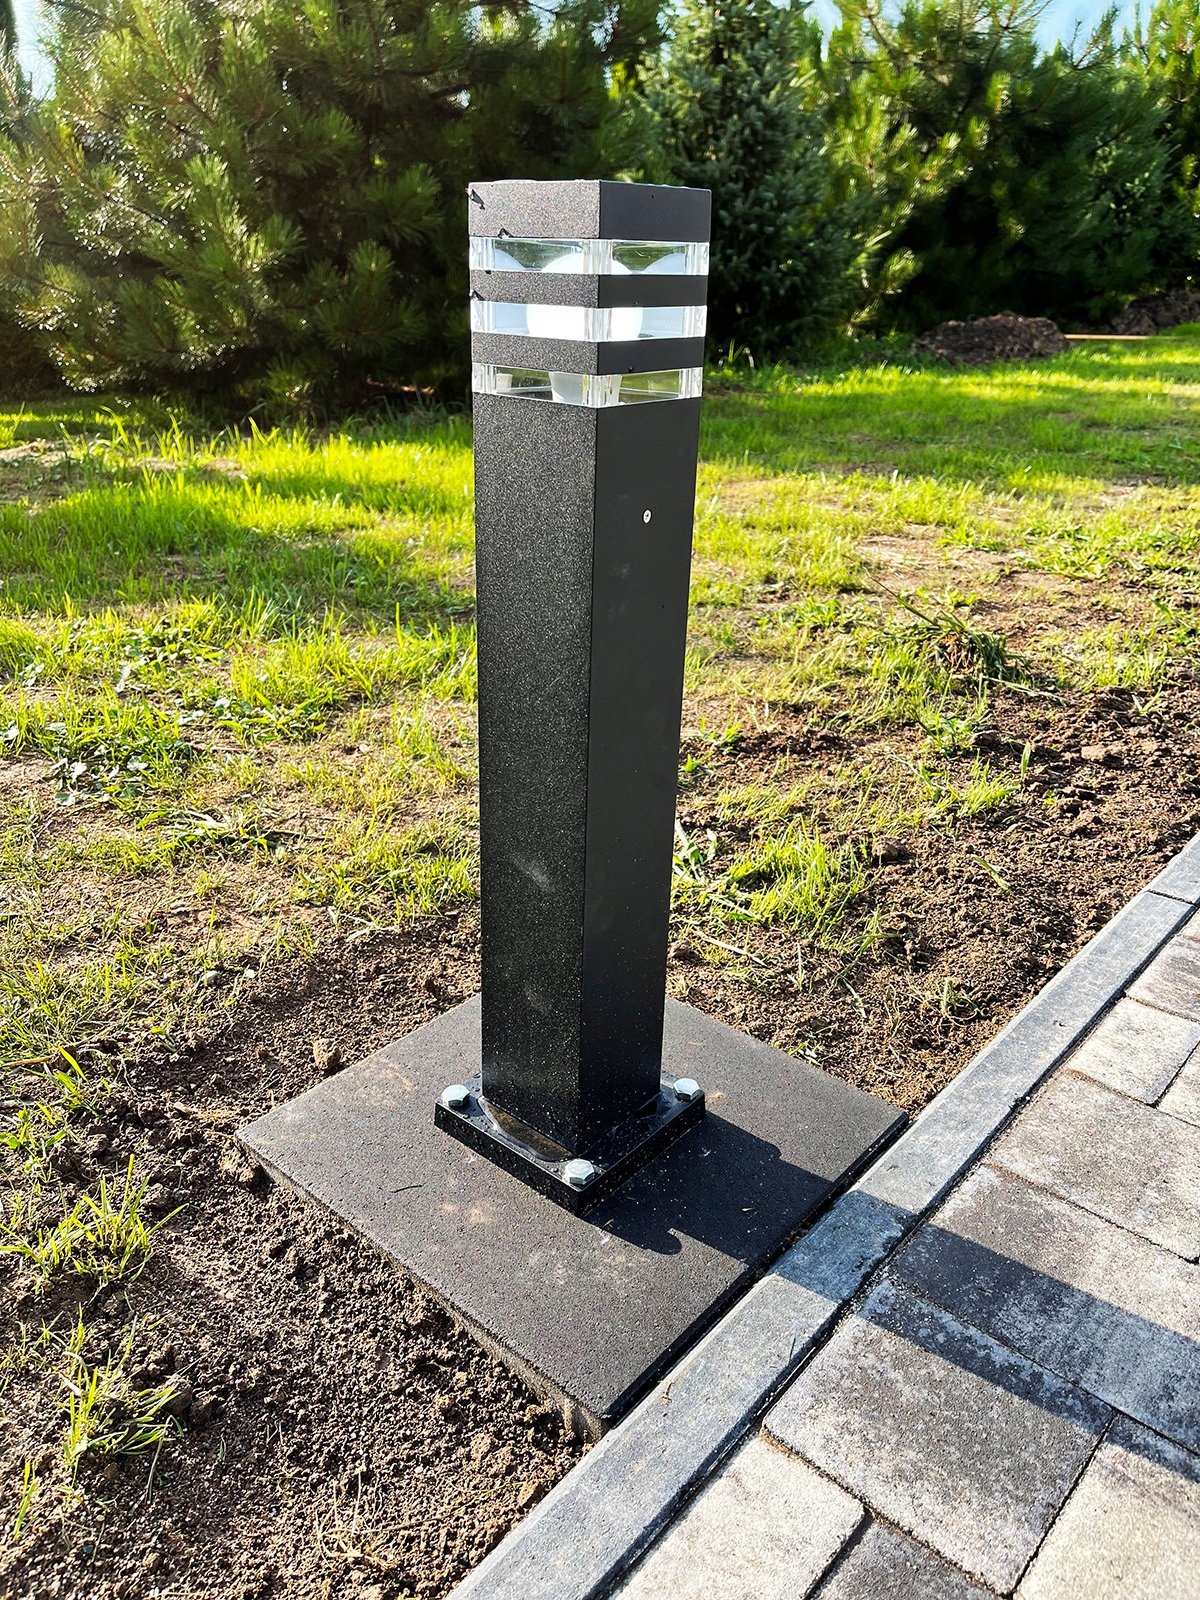 Lauko stulpo sodo lempa, stovi 40cm. Gamintojo kodas, LED polių sodo lempa, 5570